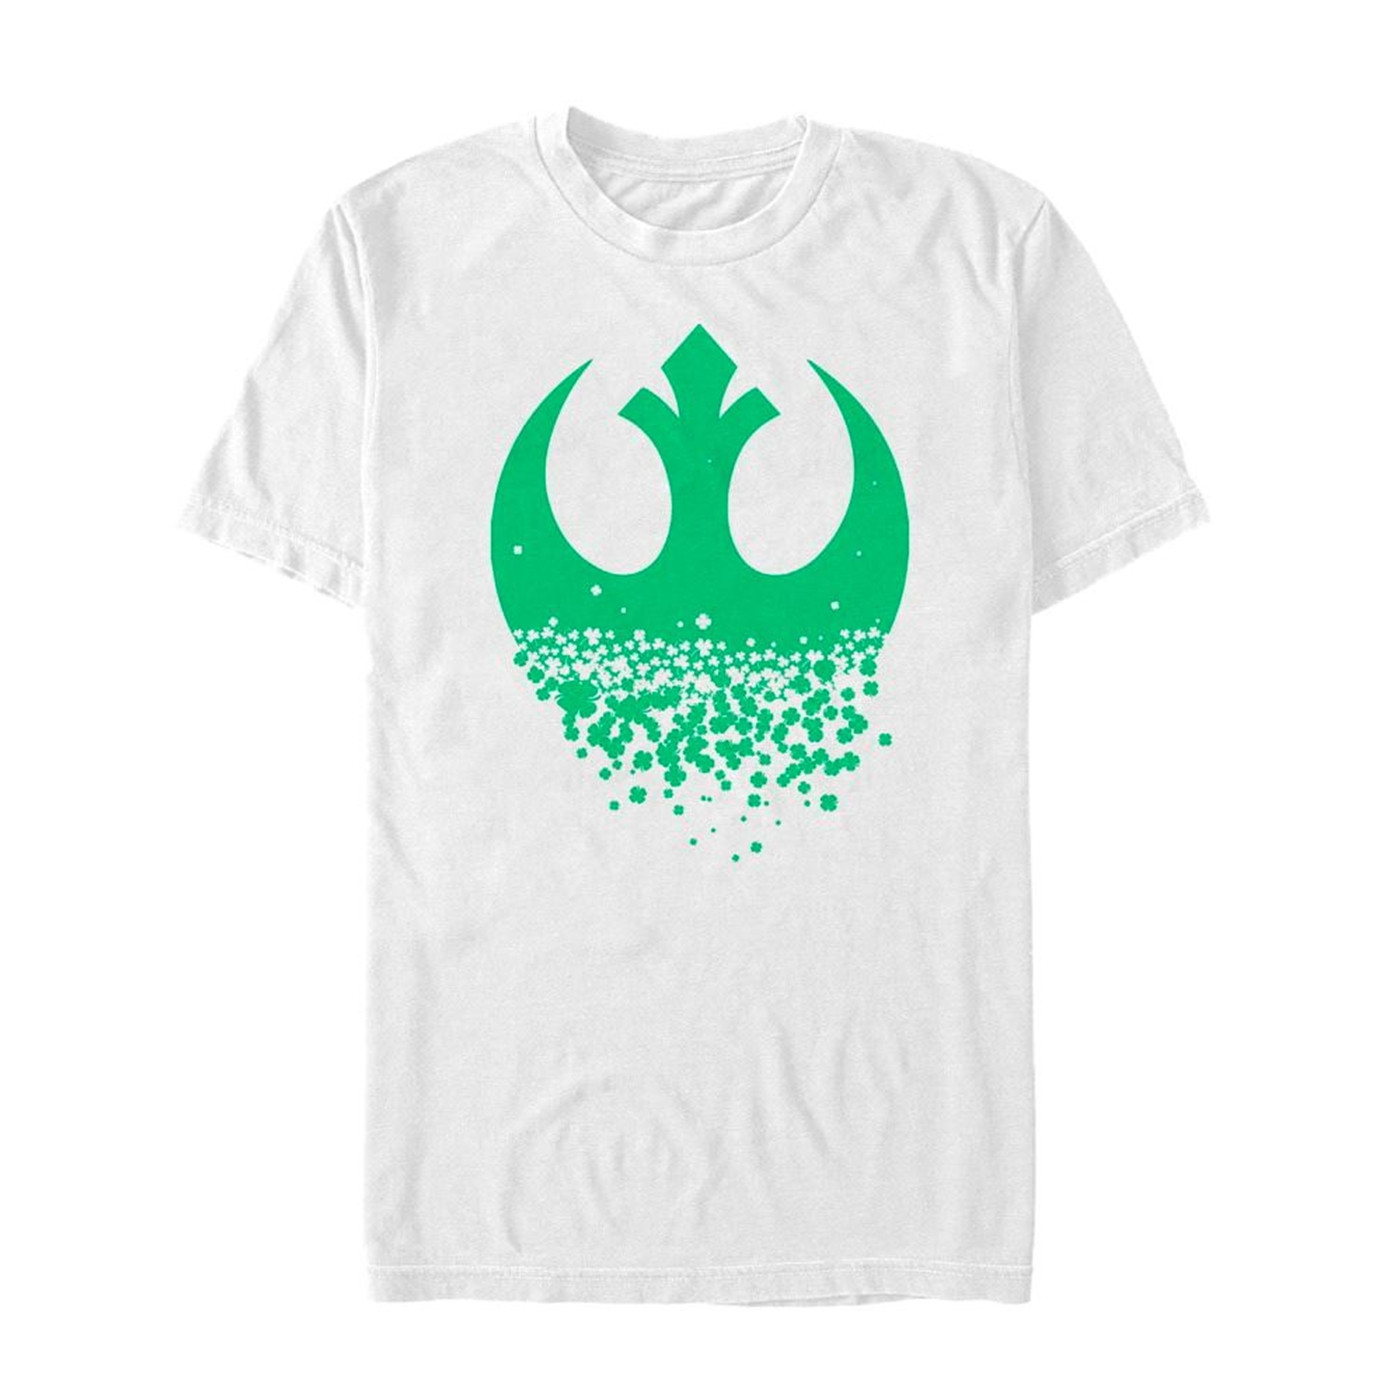 Star Wars Rebel Clover St Patrick's Day White T-Shirt